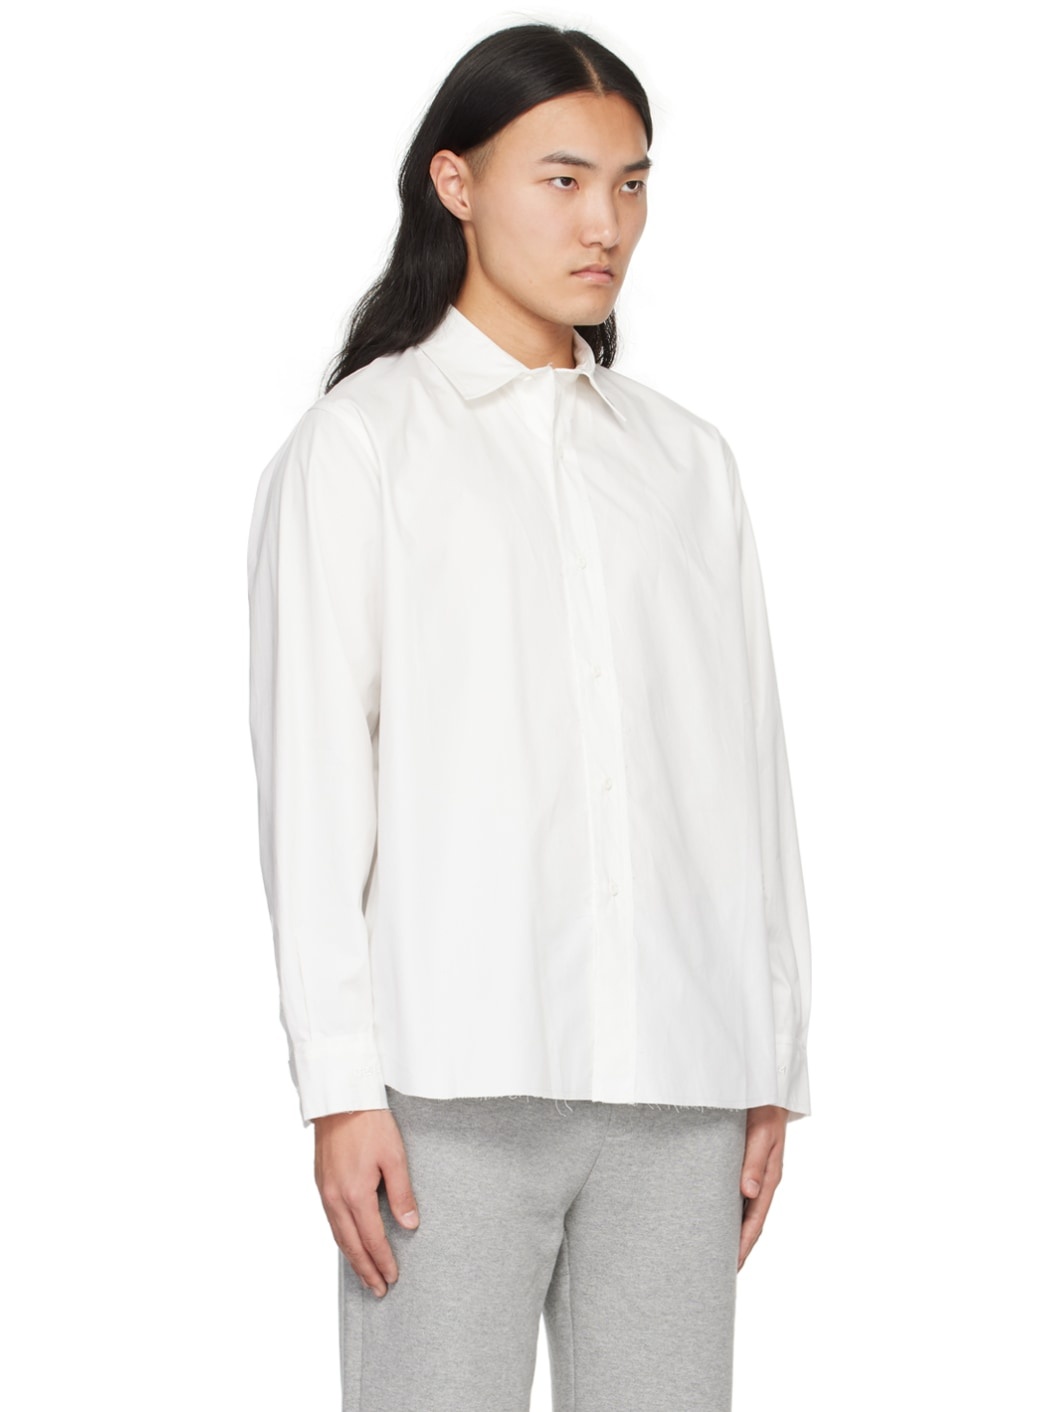 White Staff Uniform Shirt - 2